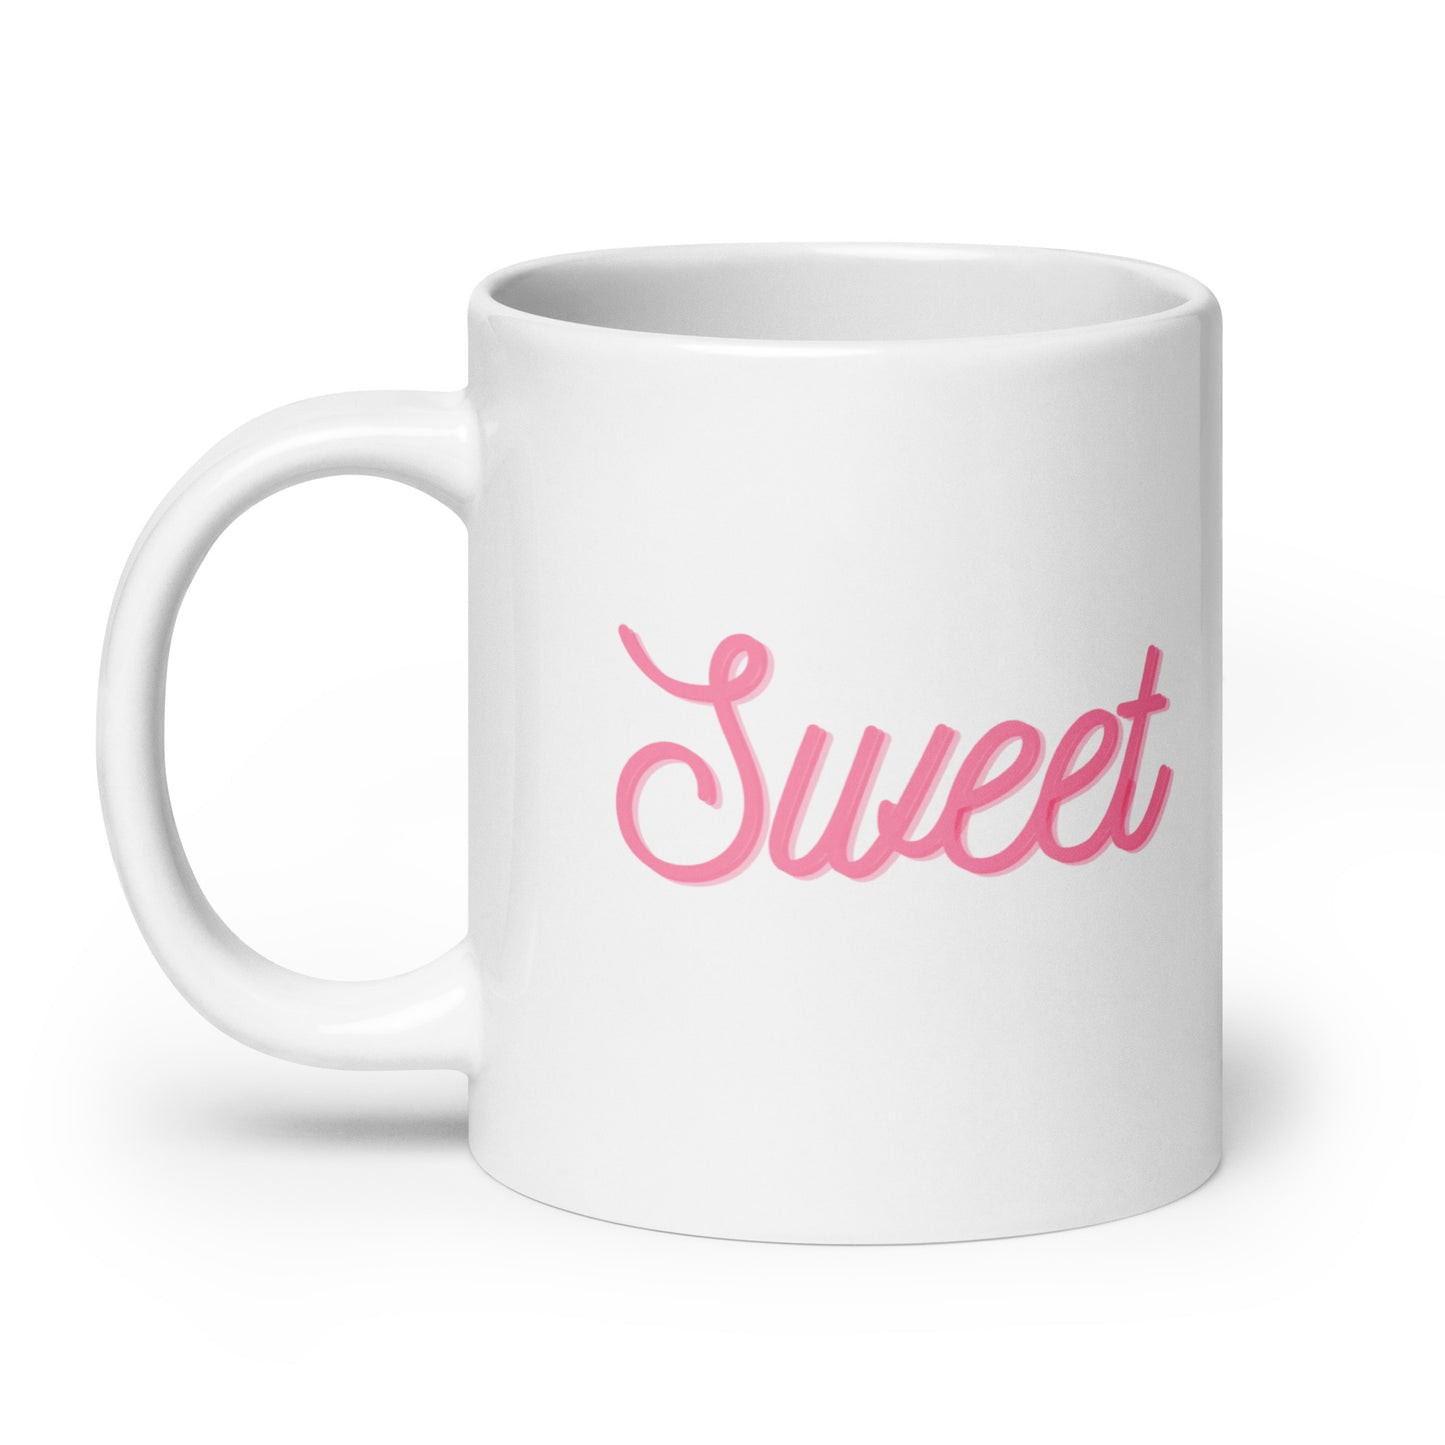 Sweet-White glossy 20 oz mug